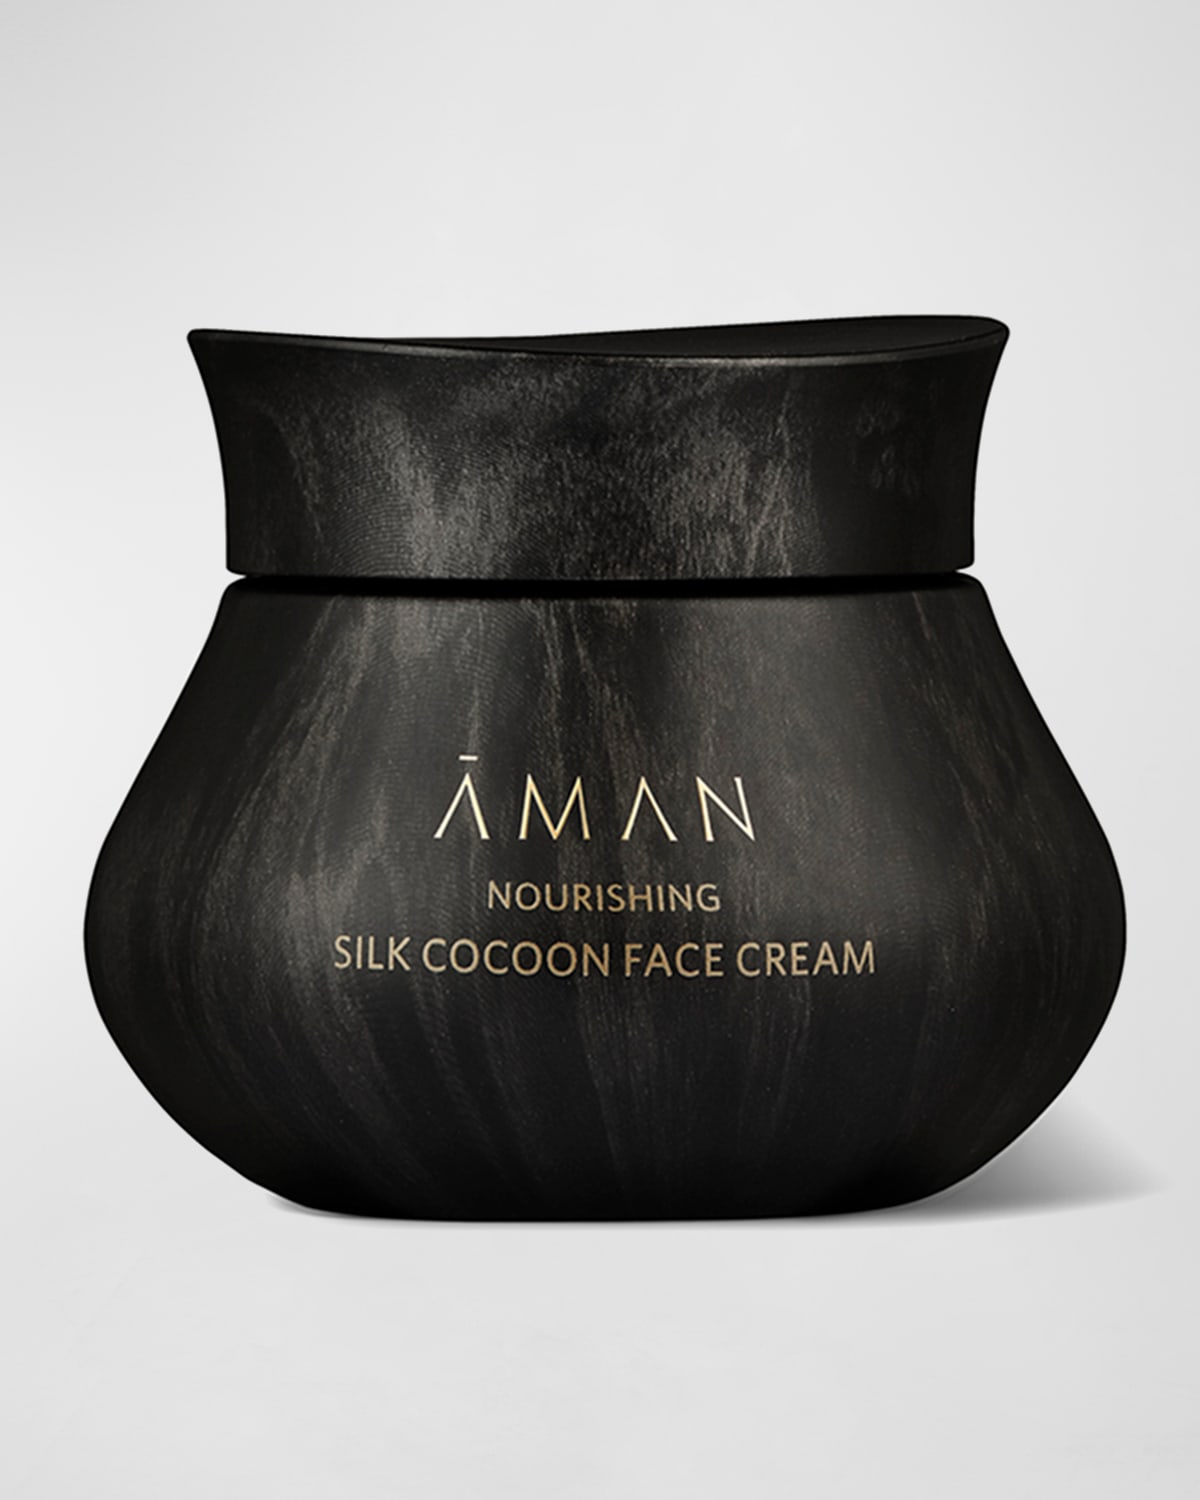 Aman Nourishing Silk Cocoon Face Cream, 1.6 oz.